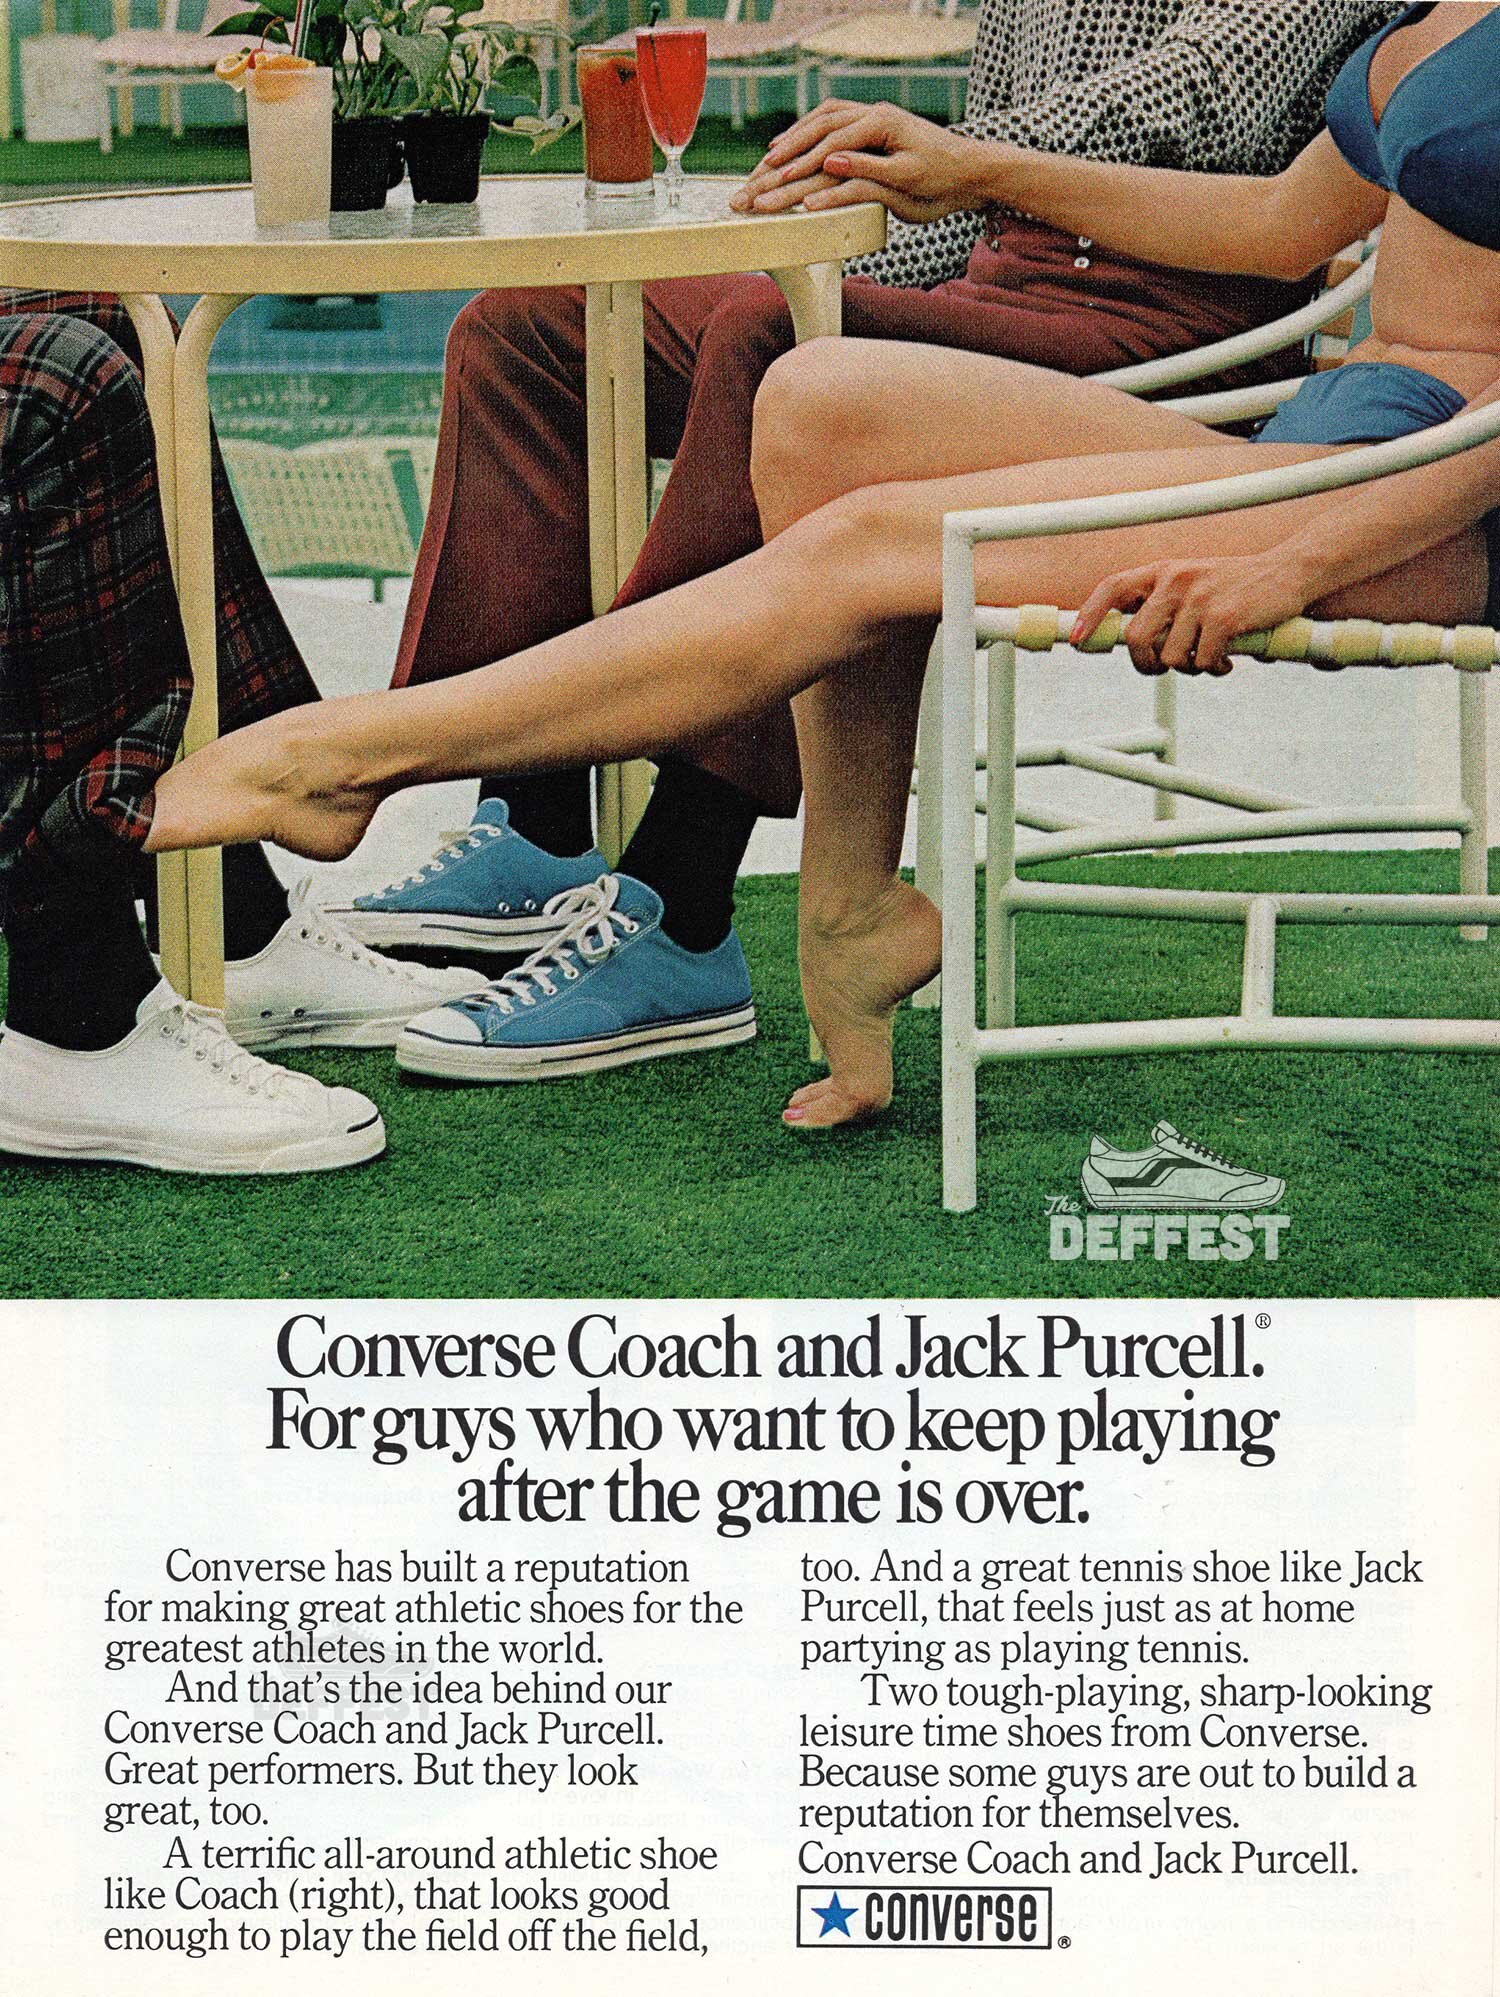 coach converse style shoes